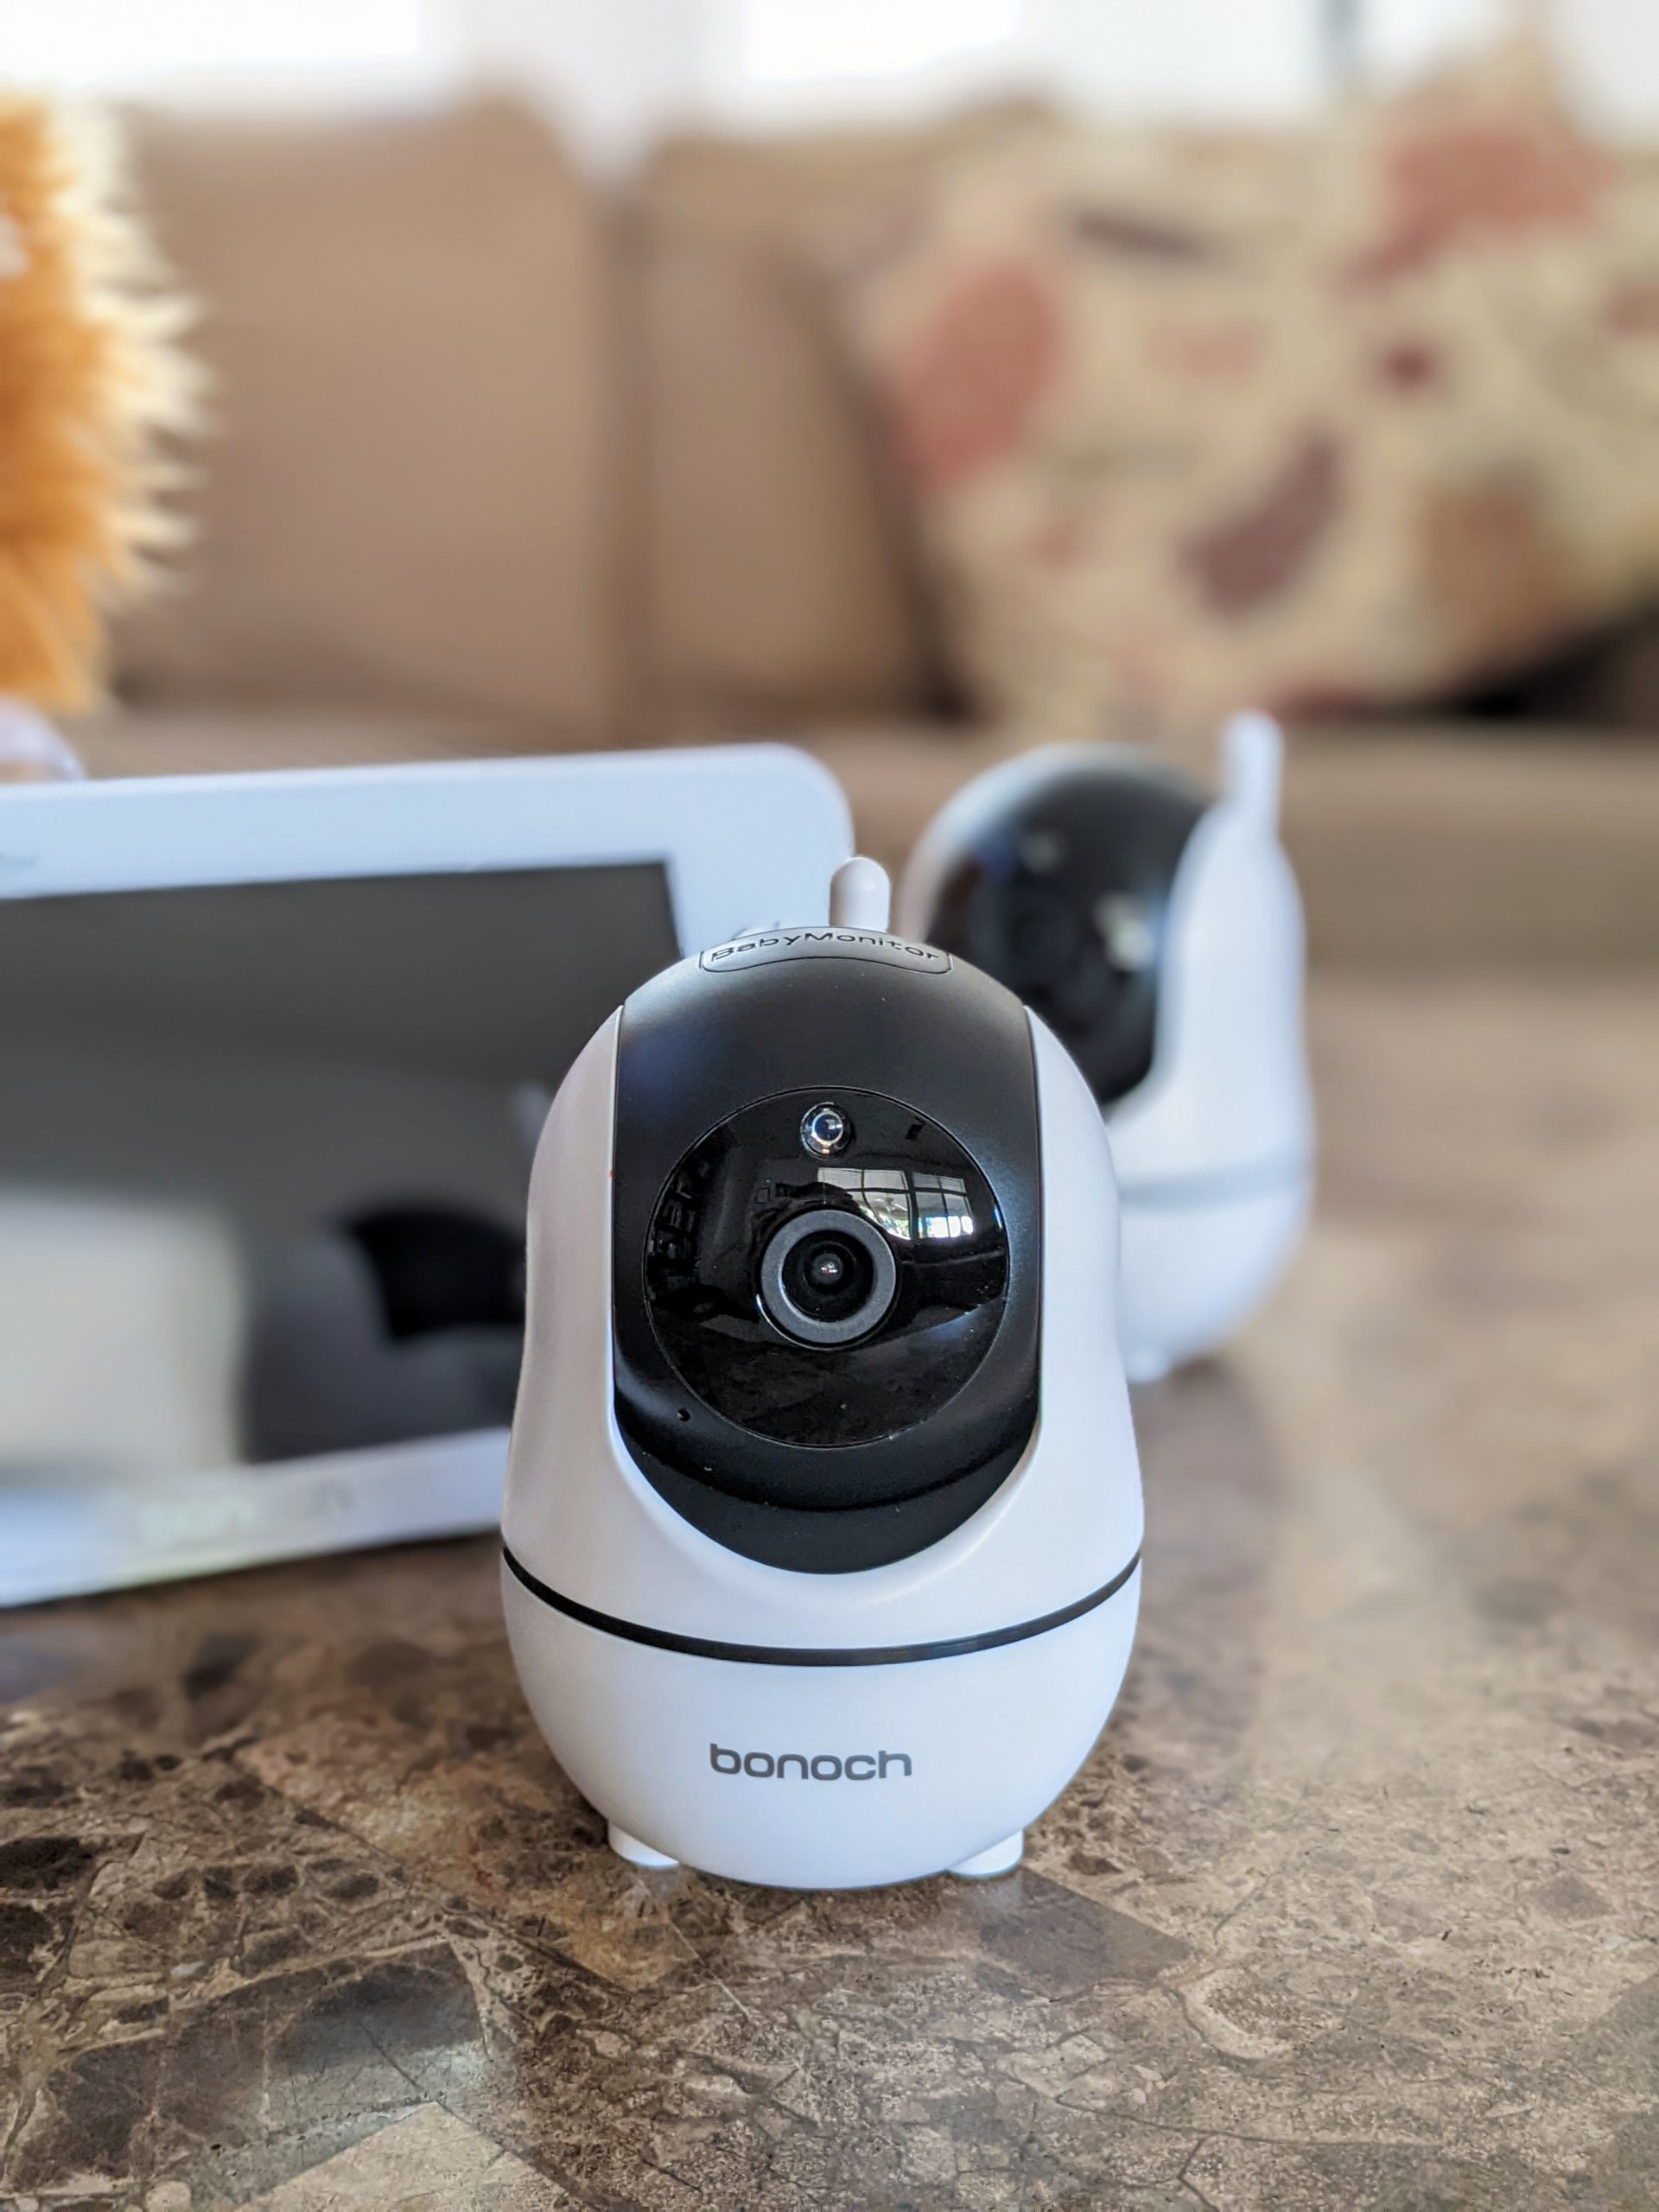 Close up of the bonoch baby monitor camera